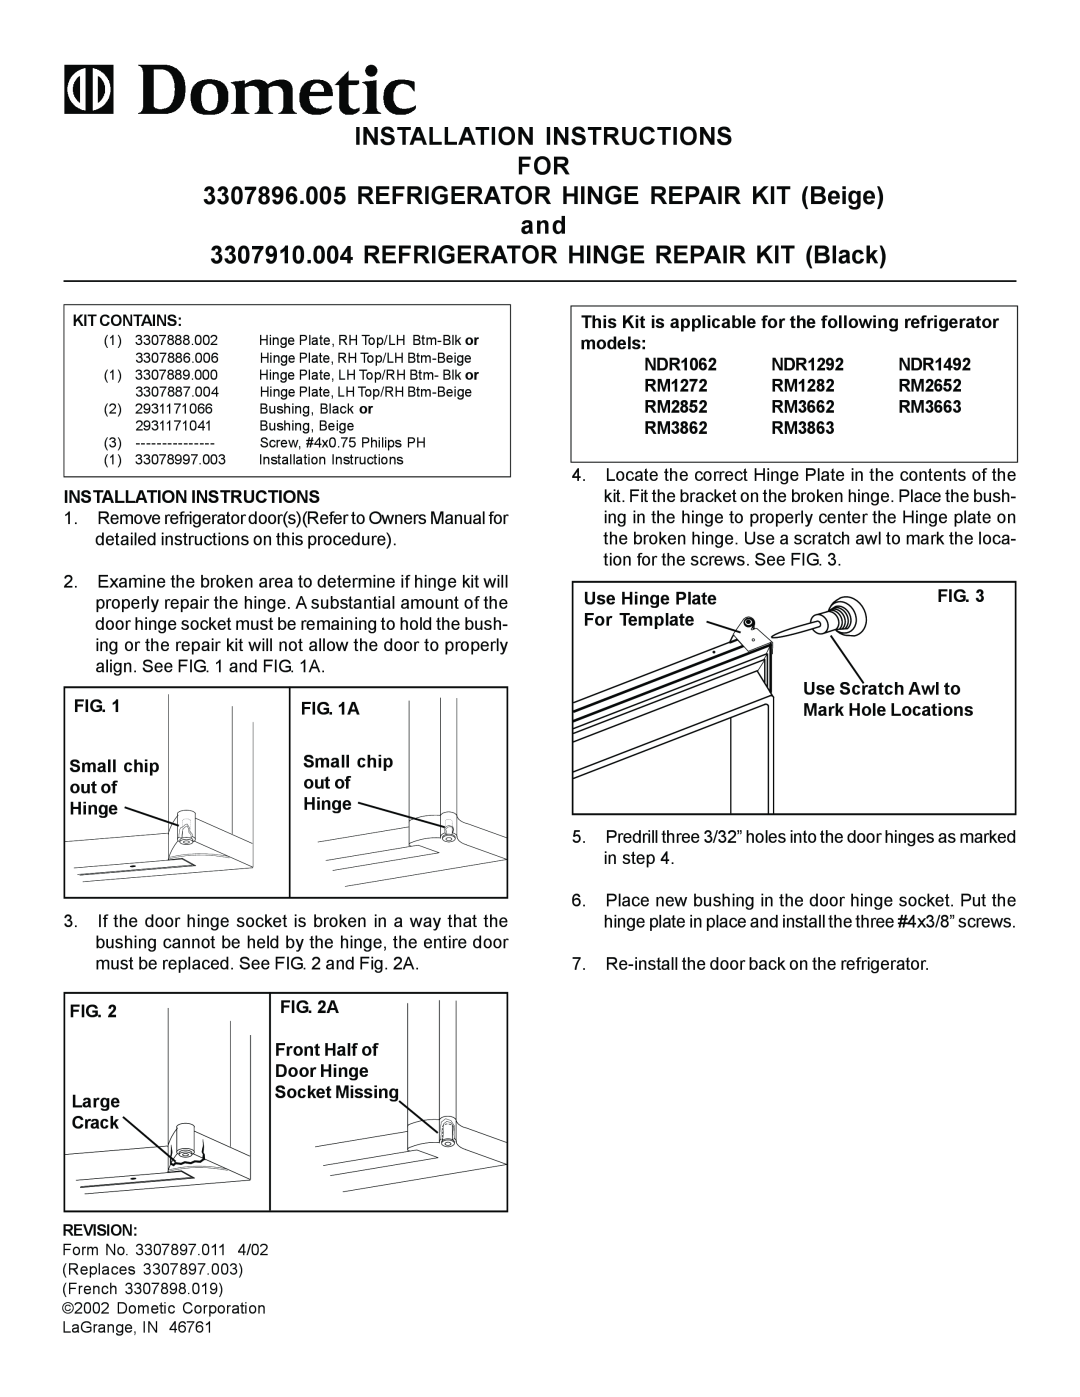 Dometic NDR1292, NDR1492 installation instructions Installation Instructions For, REFRIGERATOR HINGE REPAIR KIT Beige 